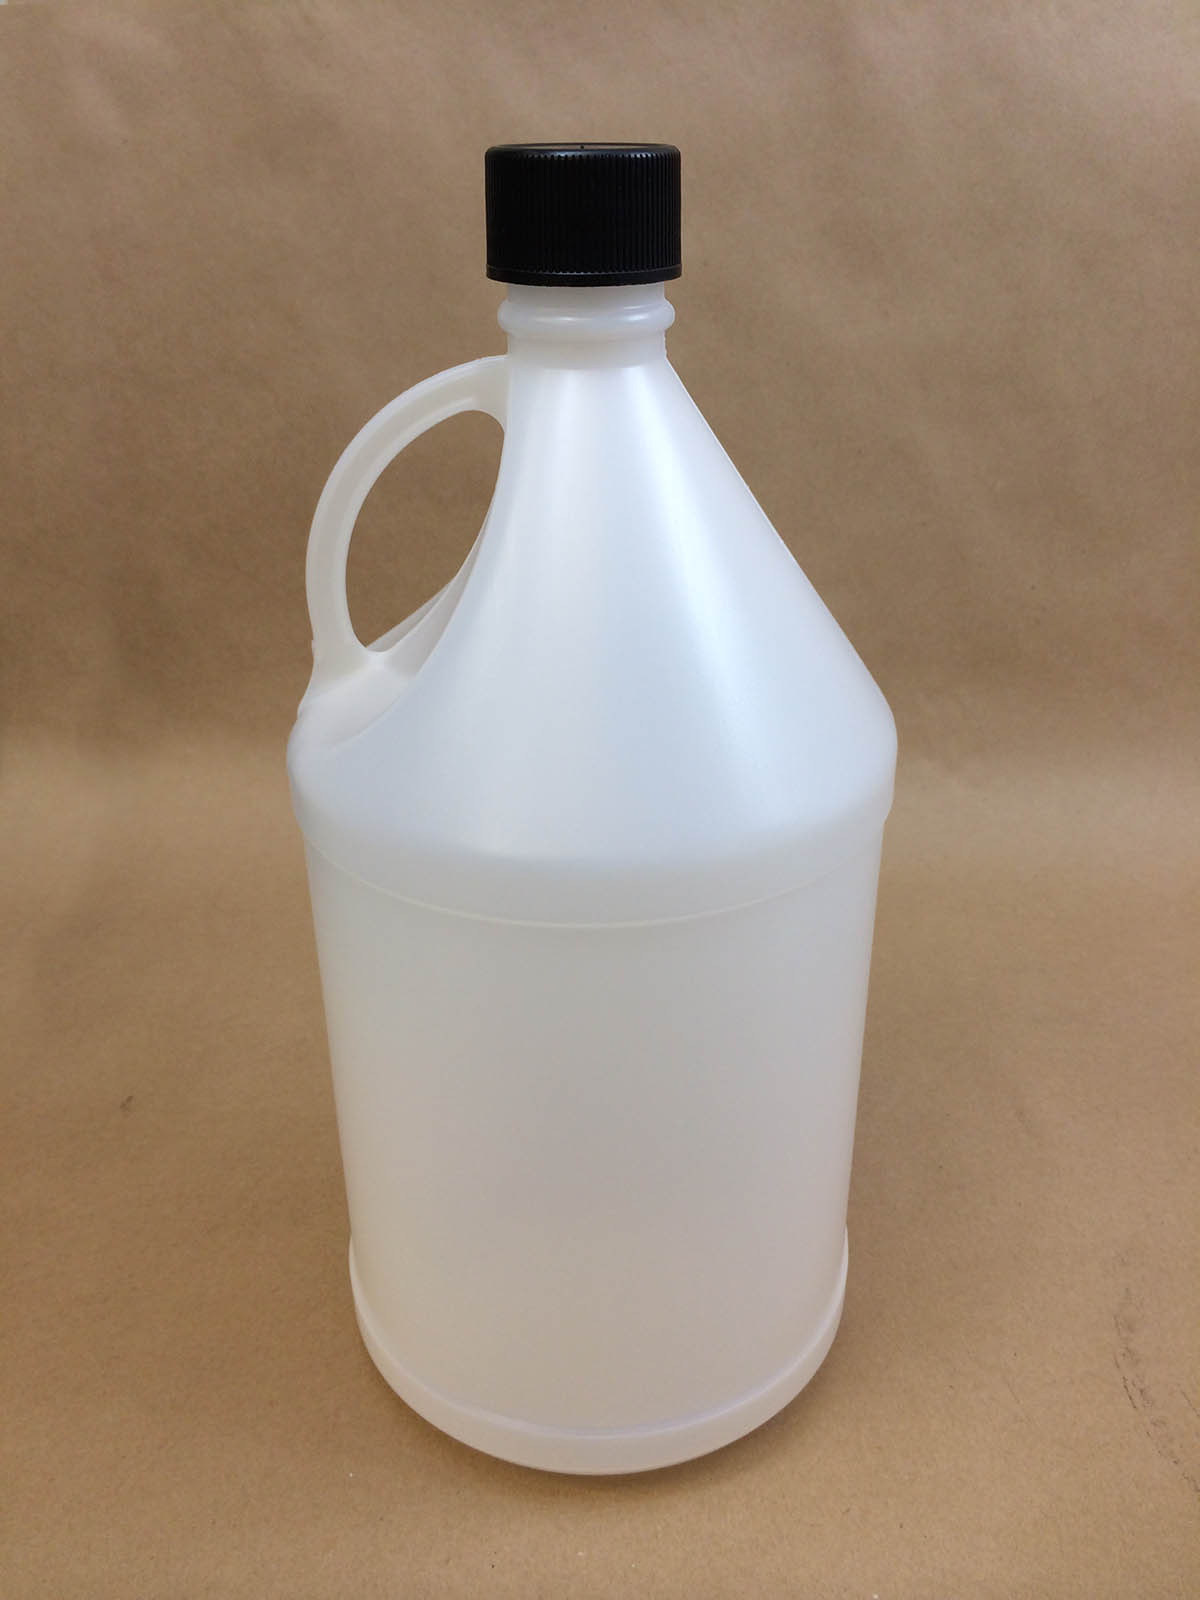 4 litre plastic jugs / acid gallon